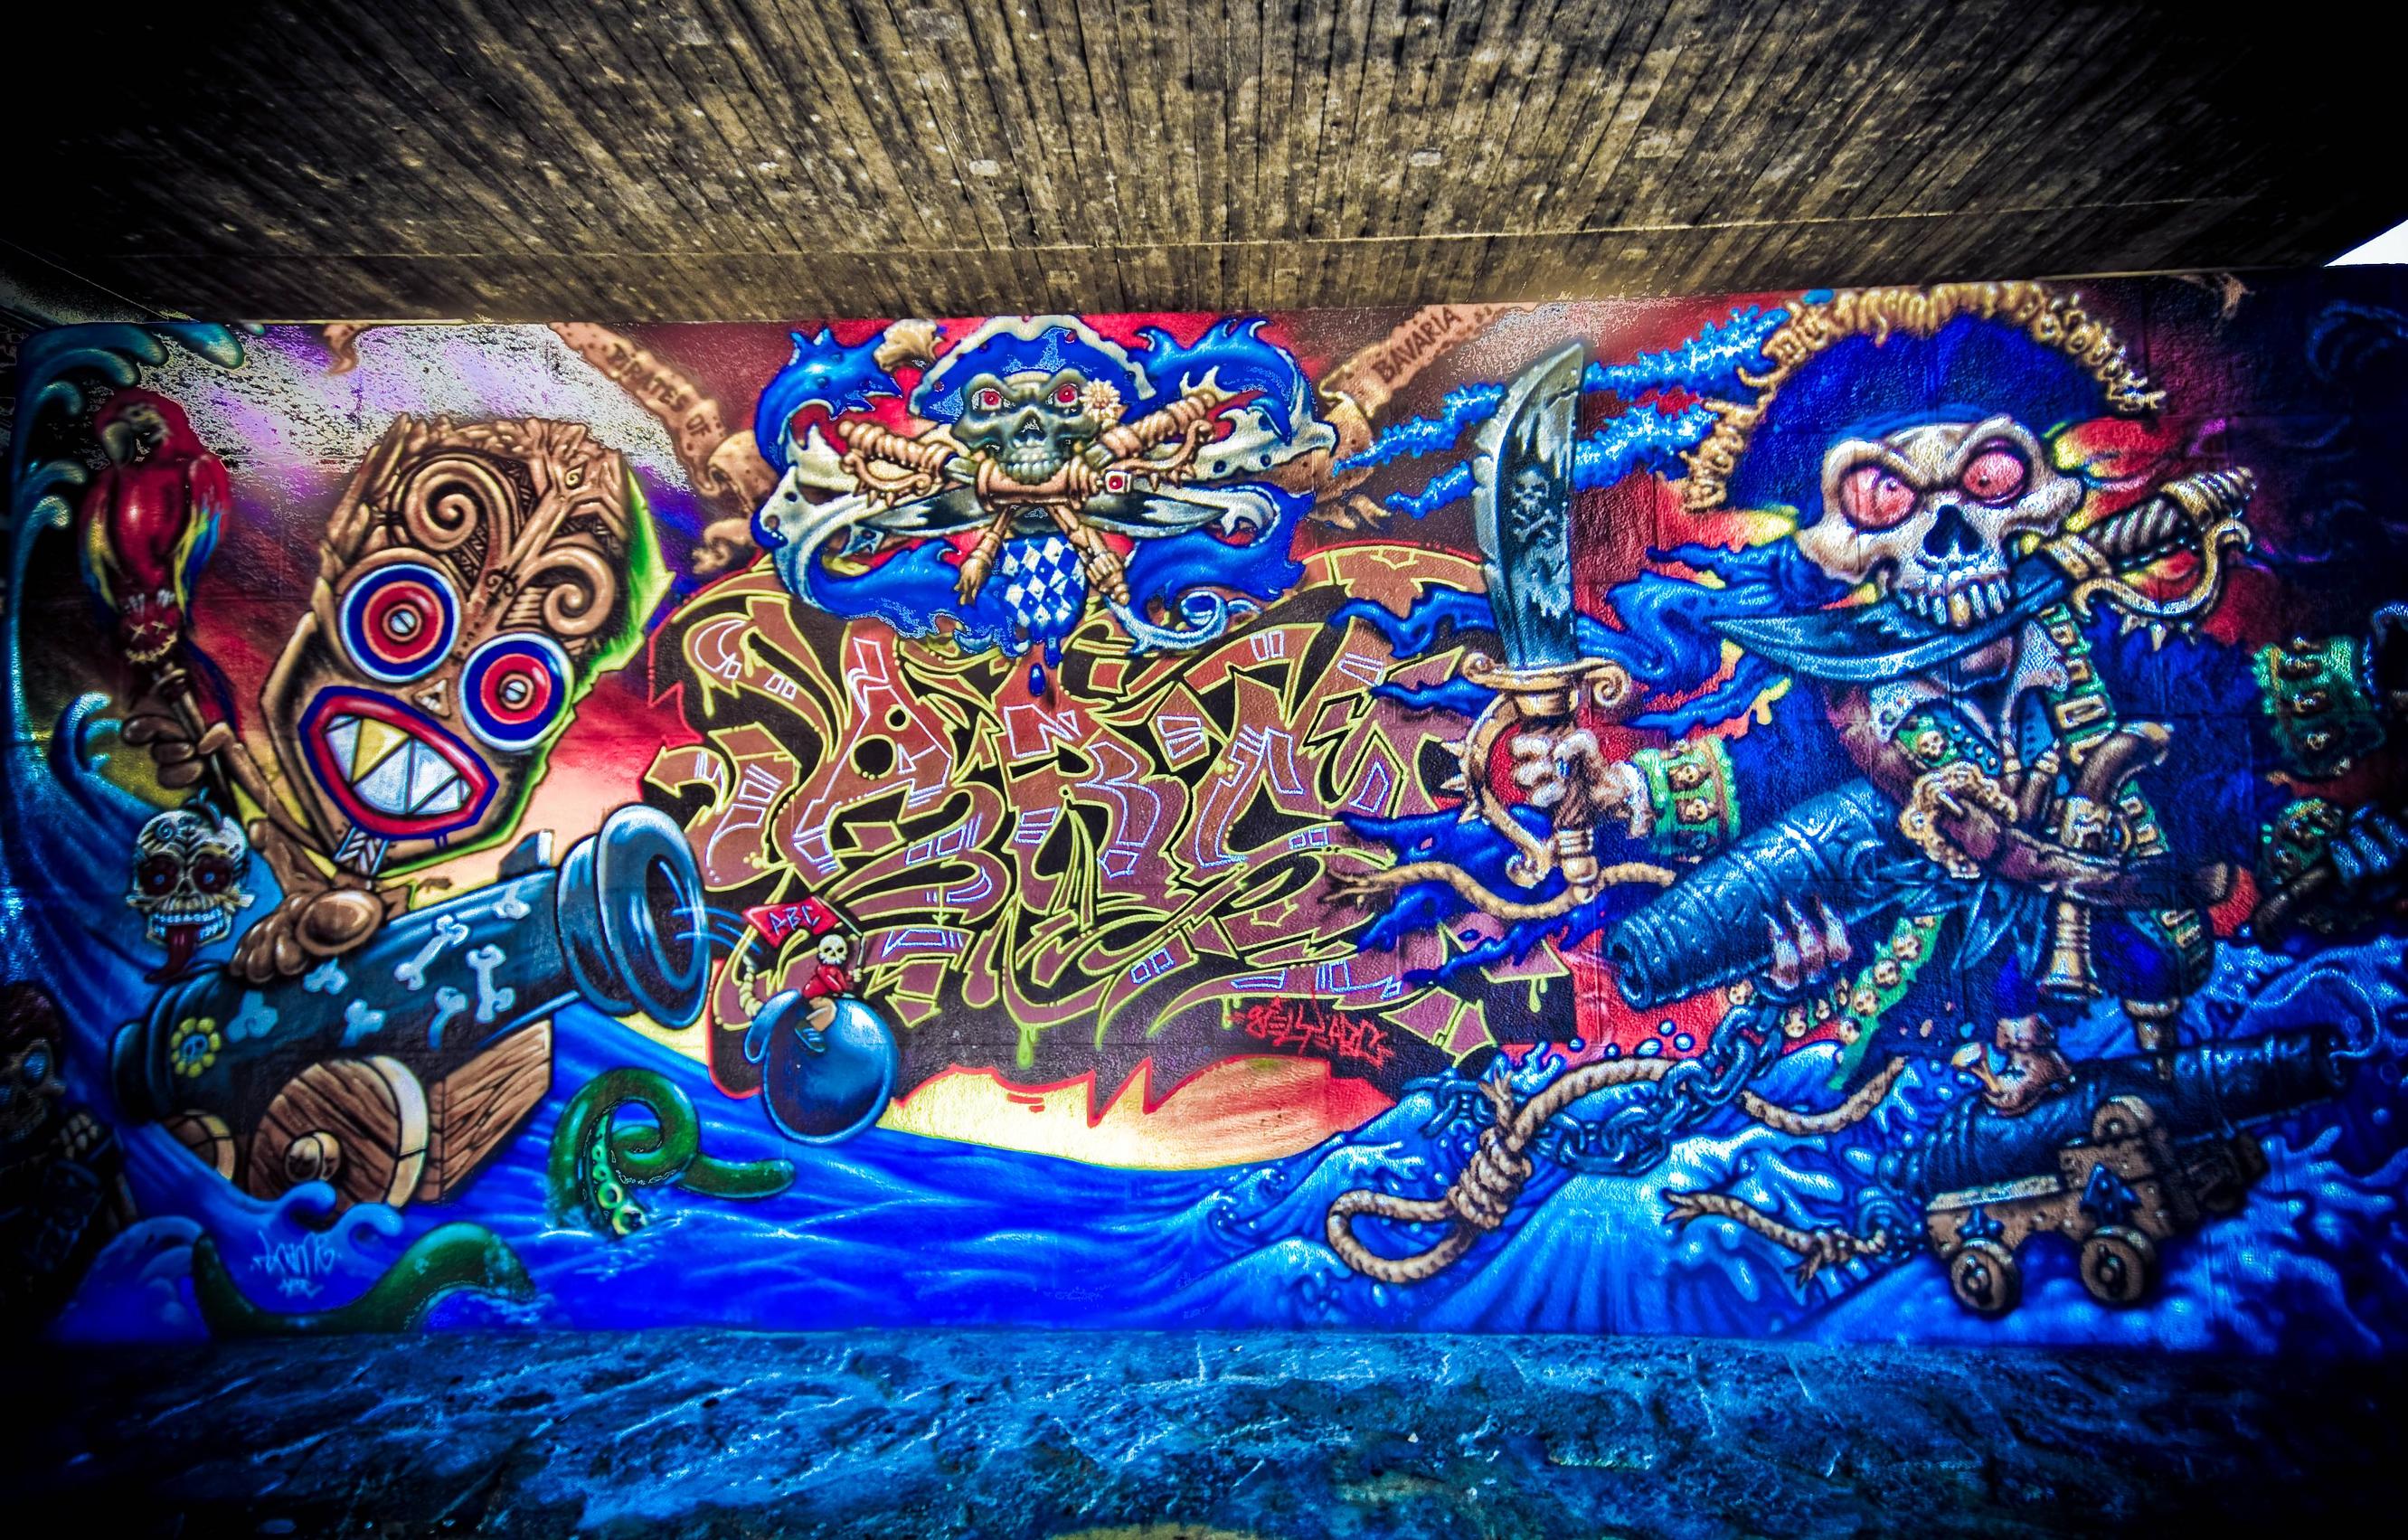 Graffiti | Wallpapers, Backgrounds, Images, Art Photos.